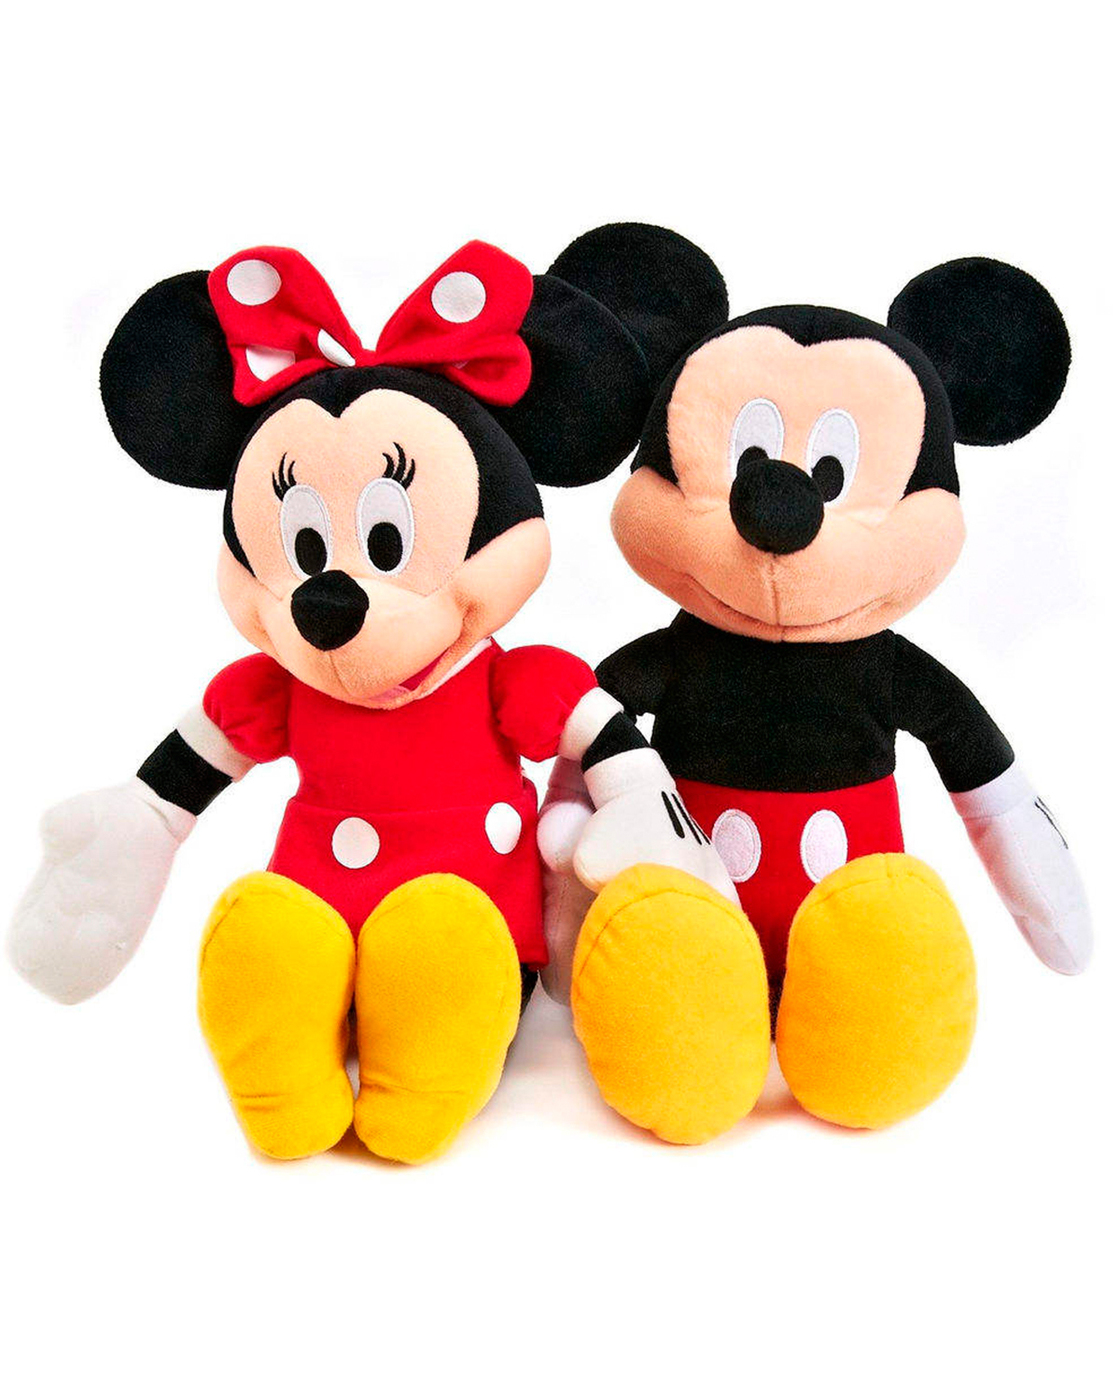 Мягкие игрушки Микки и Минни Маус Mickey Minnie Mouse, 2 шт. 35 см зубная щетка oral b kids mickey mouse микки маус от 2 до 4 лет мягкая синяя